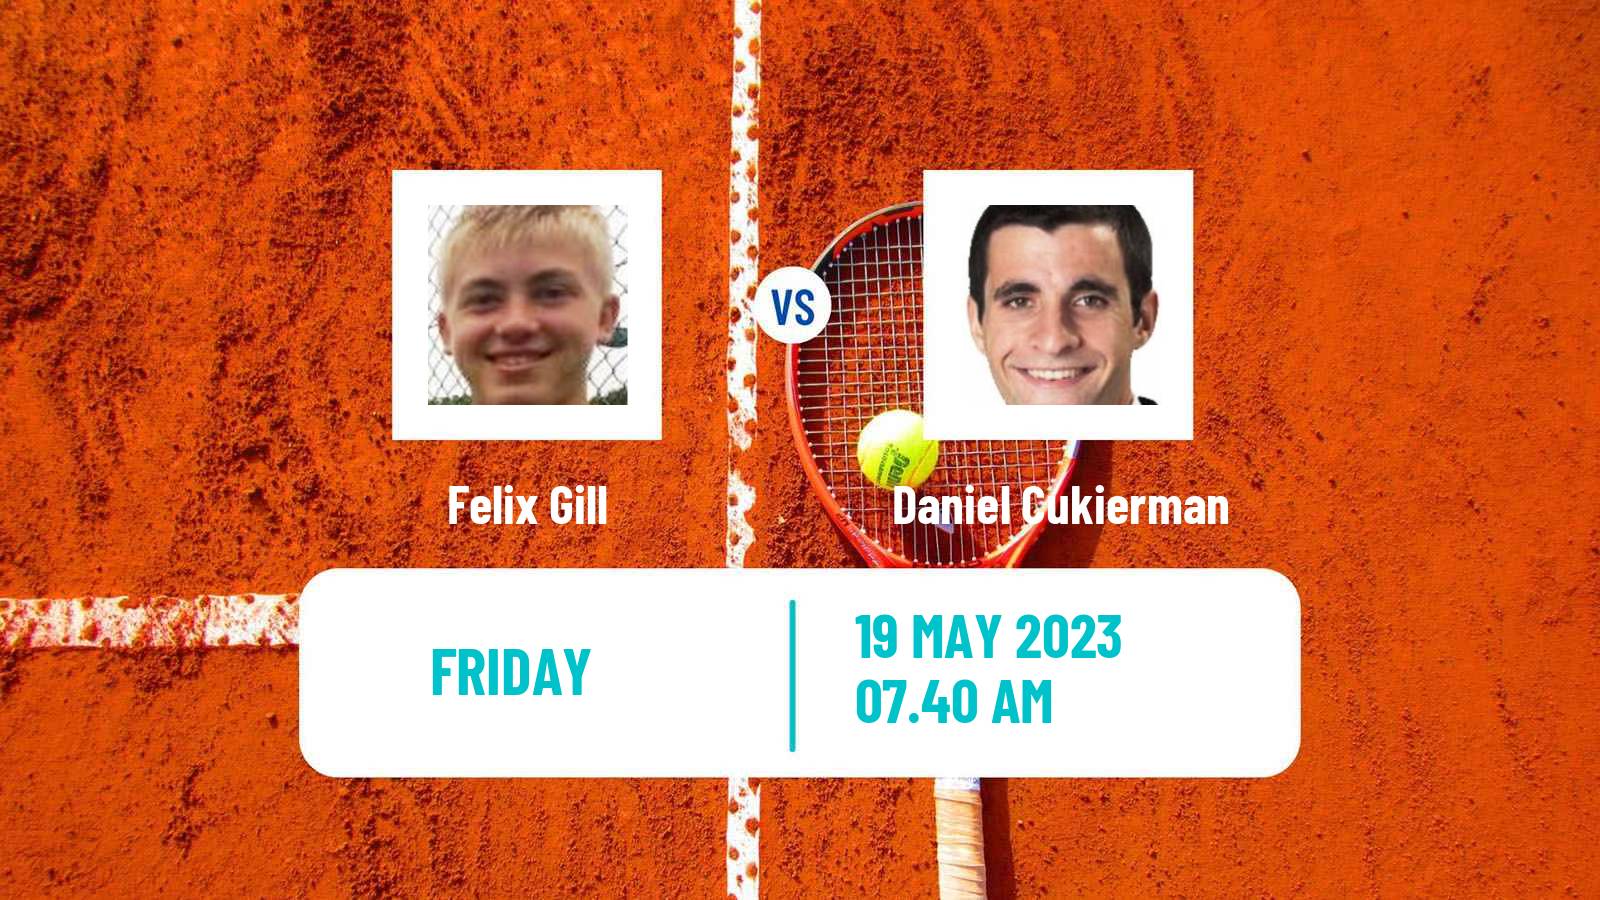 Tennis ITF M25 Gurb Men Felix Gill - Daniel Cukierman